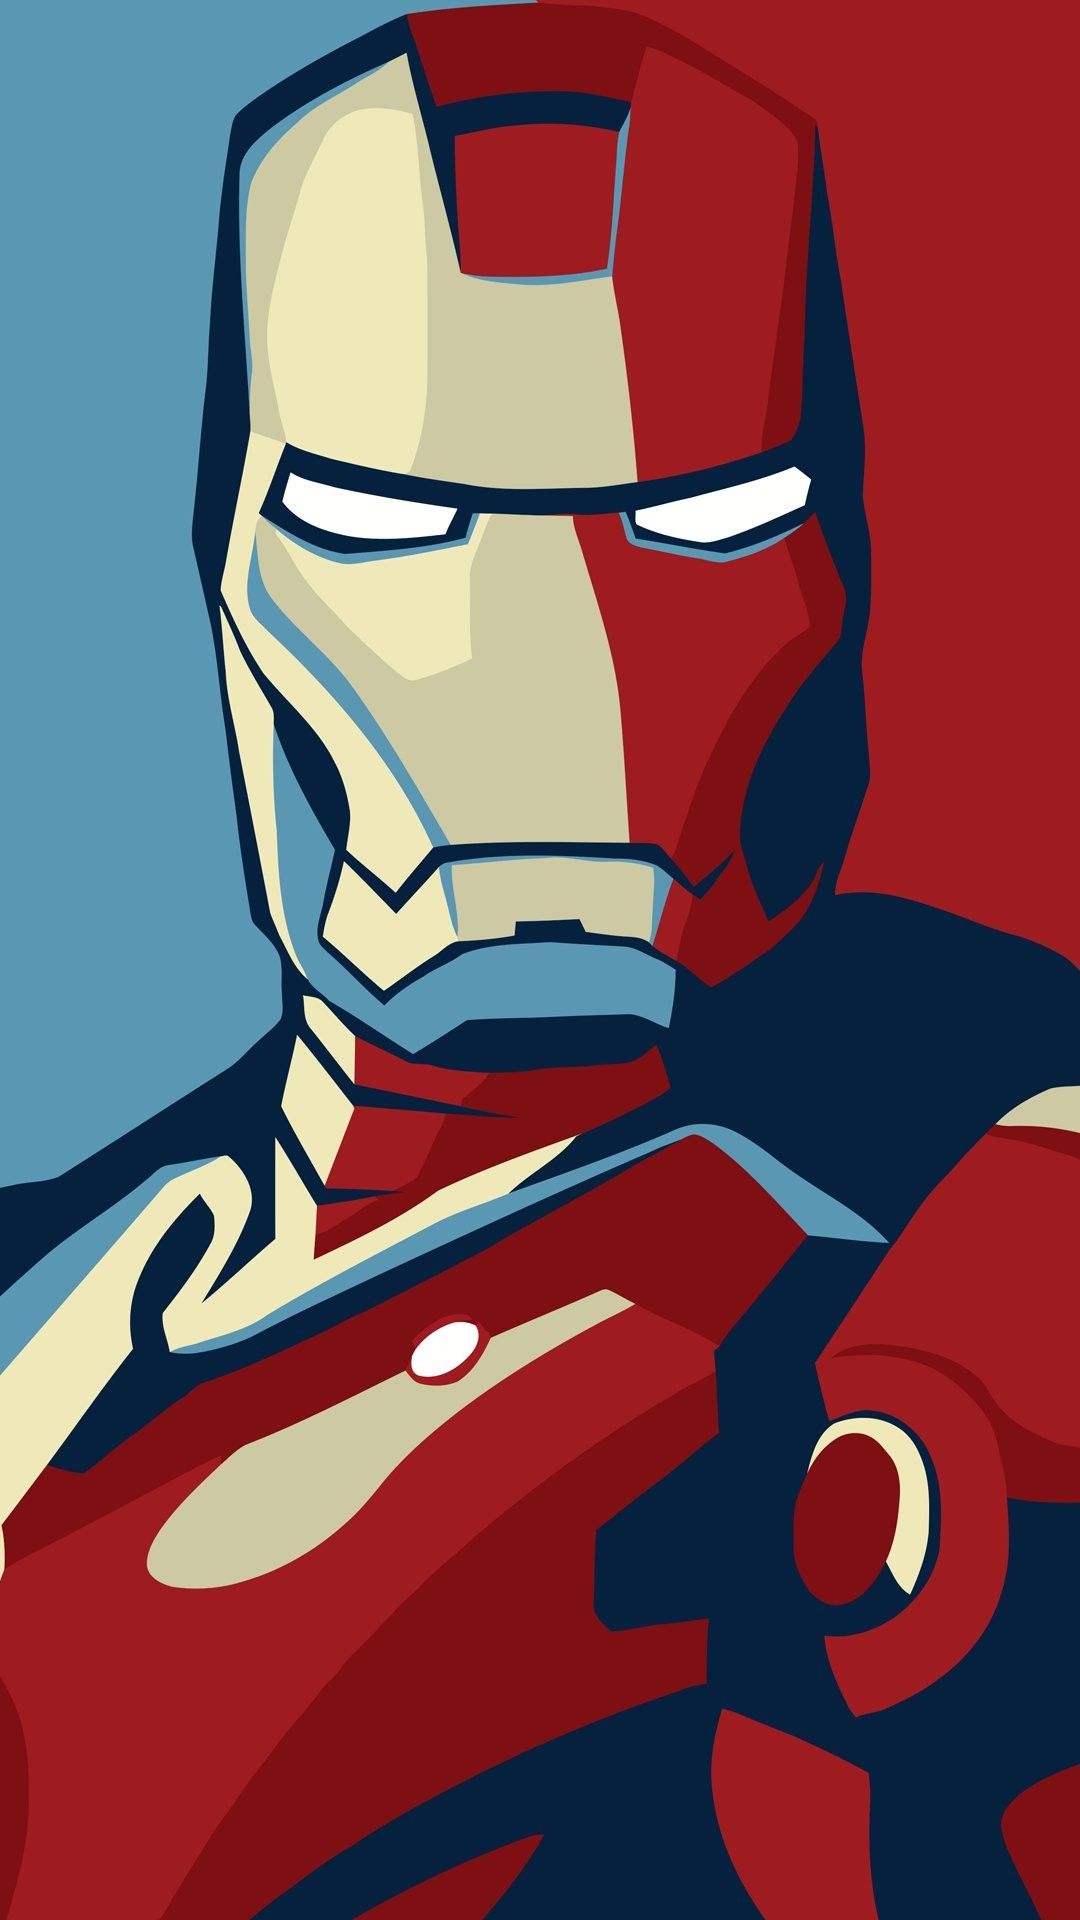 1080x1920 Iron Man Iphone Wallpaper #ironmaniphonewallpaper